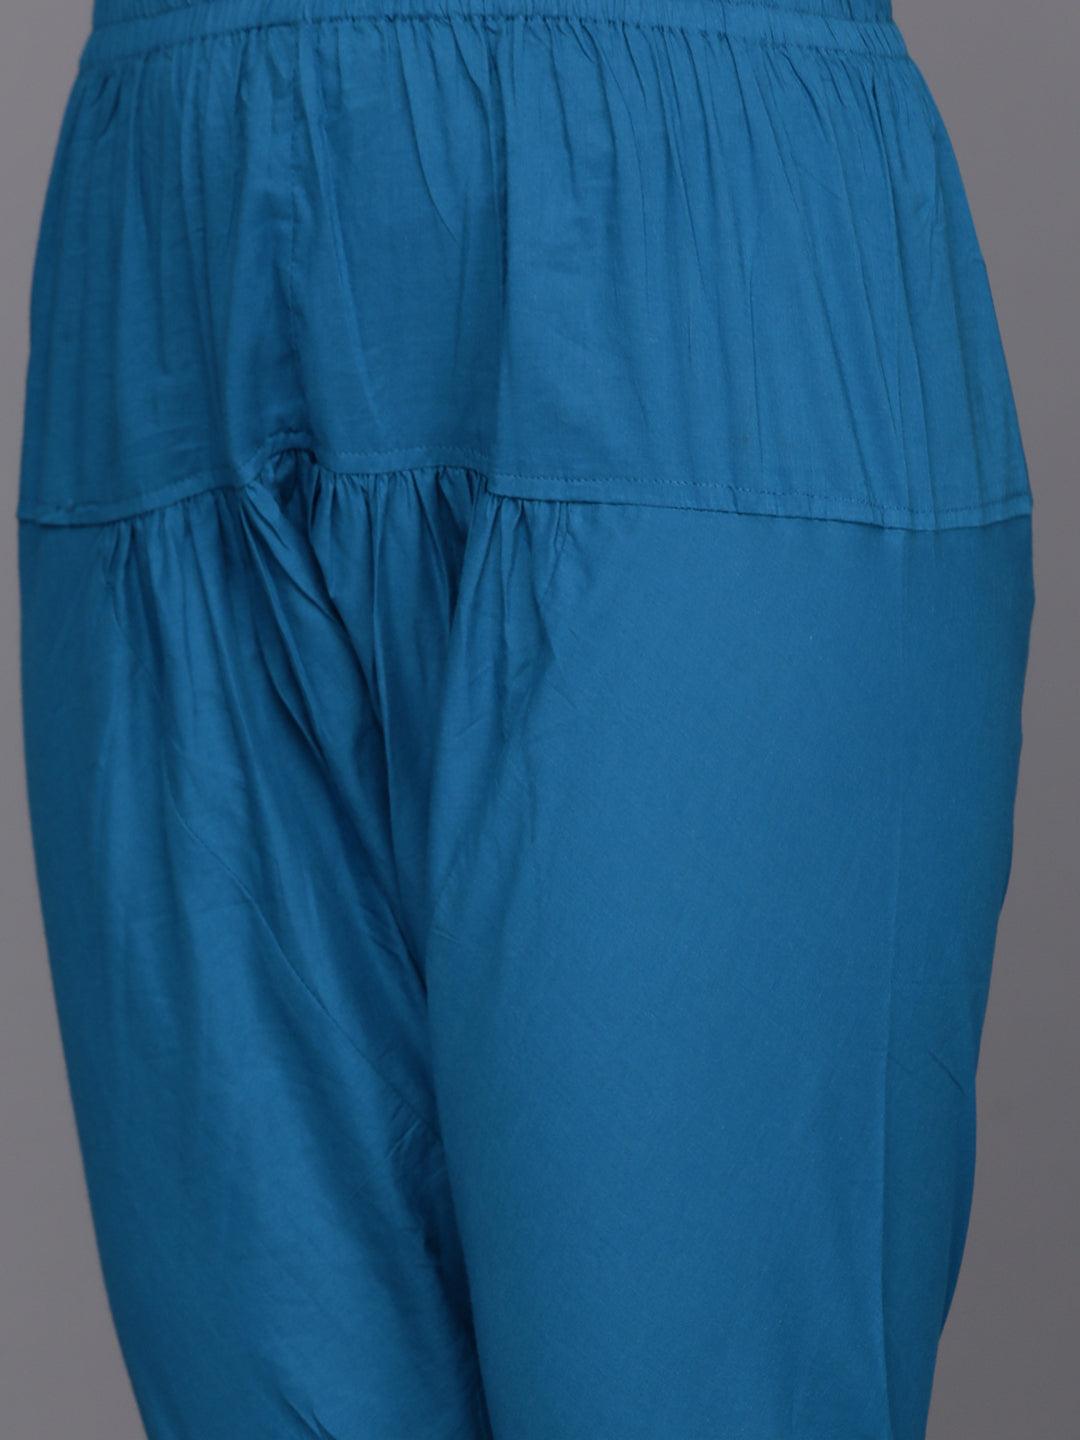 Blue Yoke Design Cotton Anarkali Suit Set With Churidar - Libas